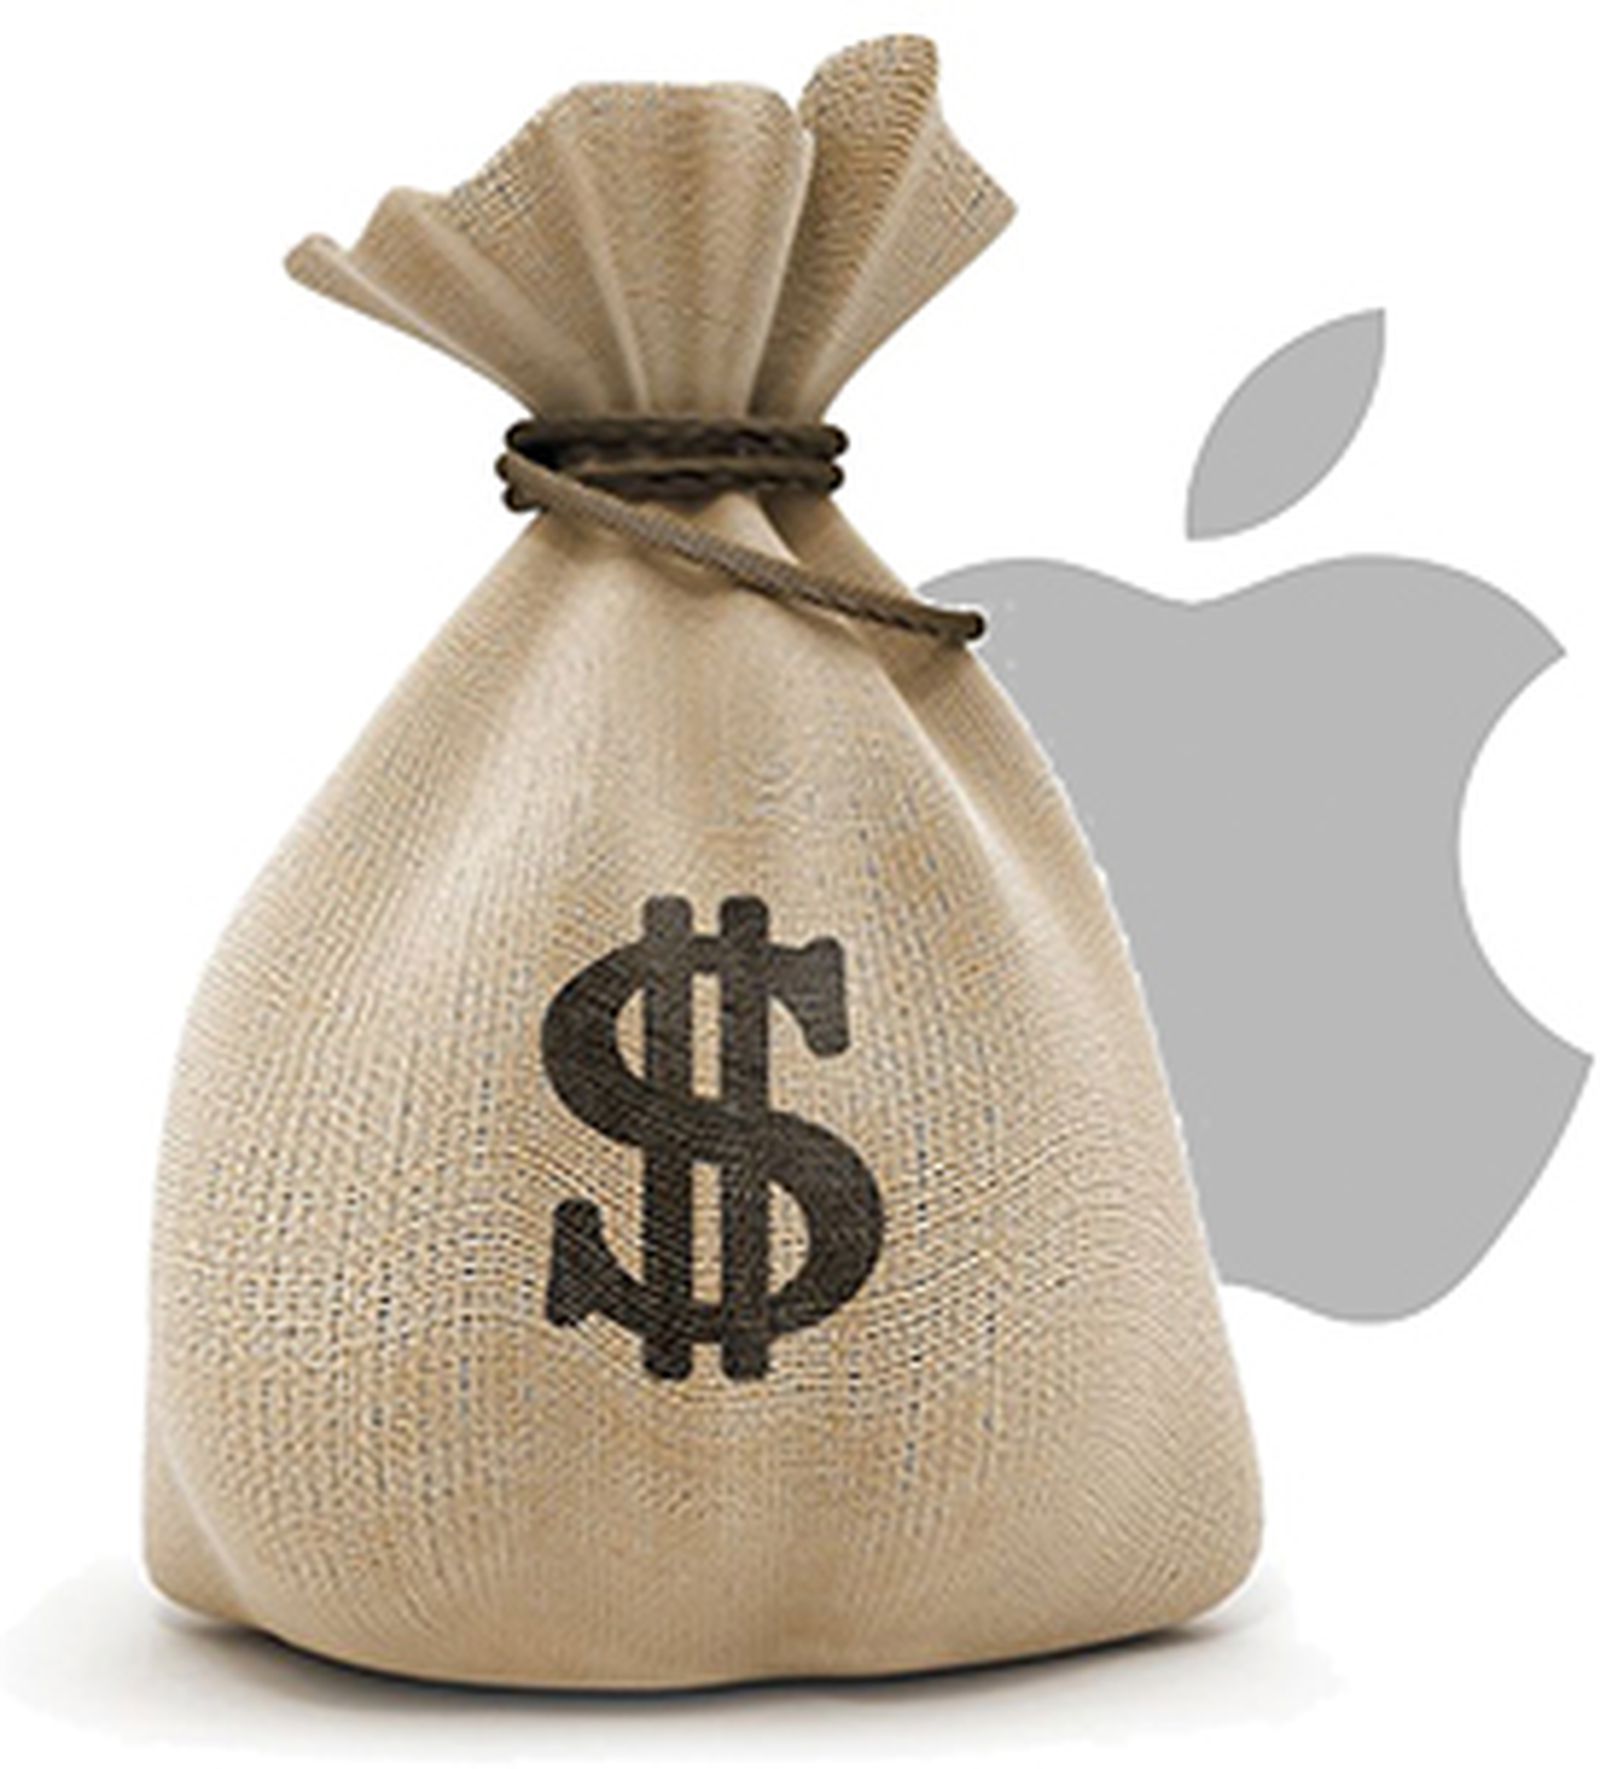 Apple to Raise Up to 12 Billion in Debt to Fund Capital Return Program